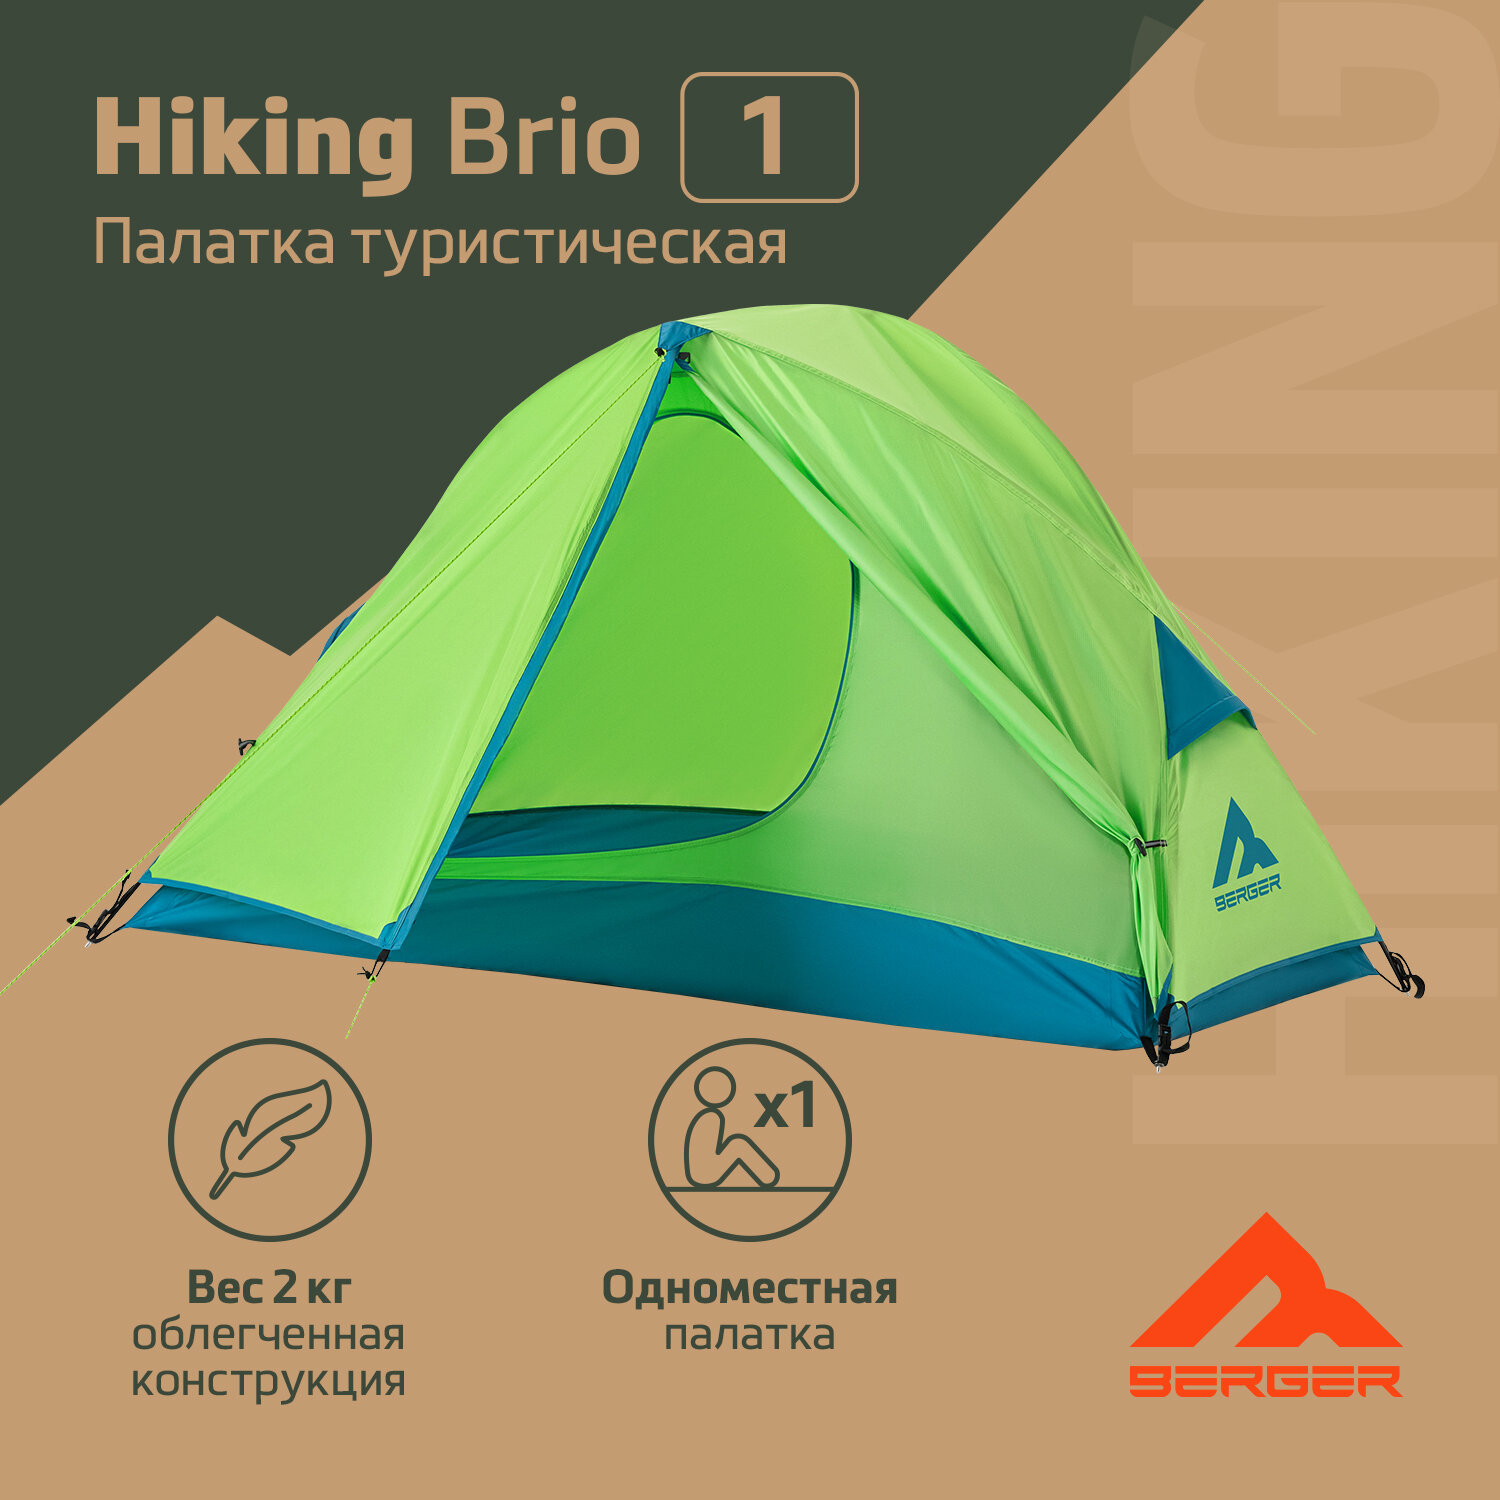 Палатка одноместная Berger Hiking Brio 1 BHB241T-01, зеленый